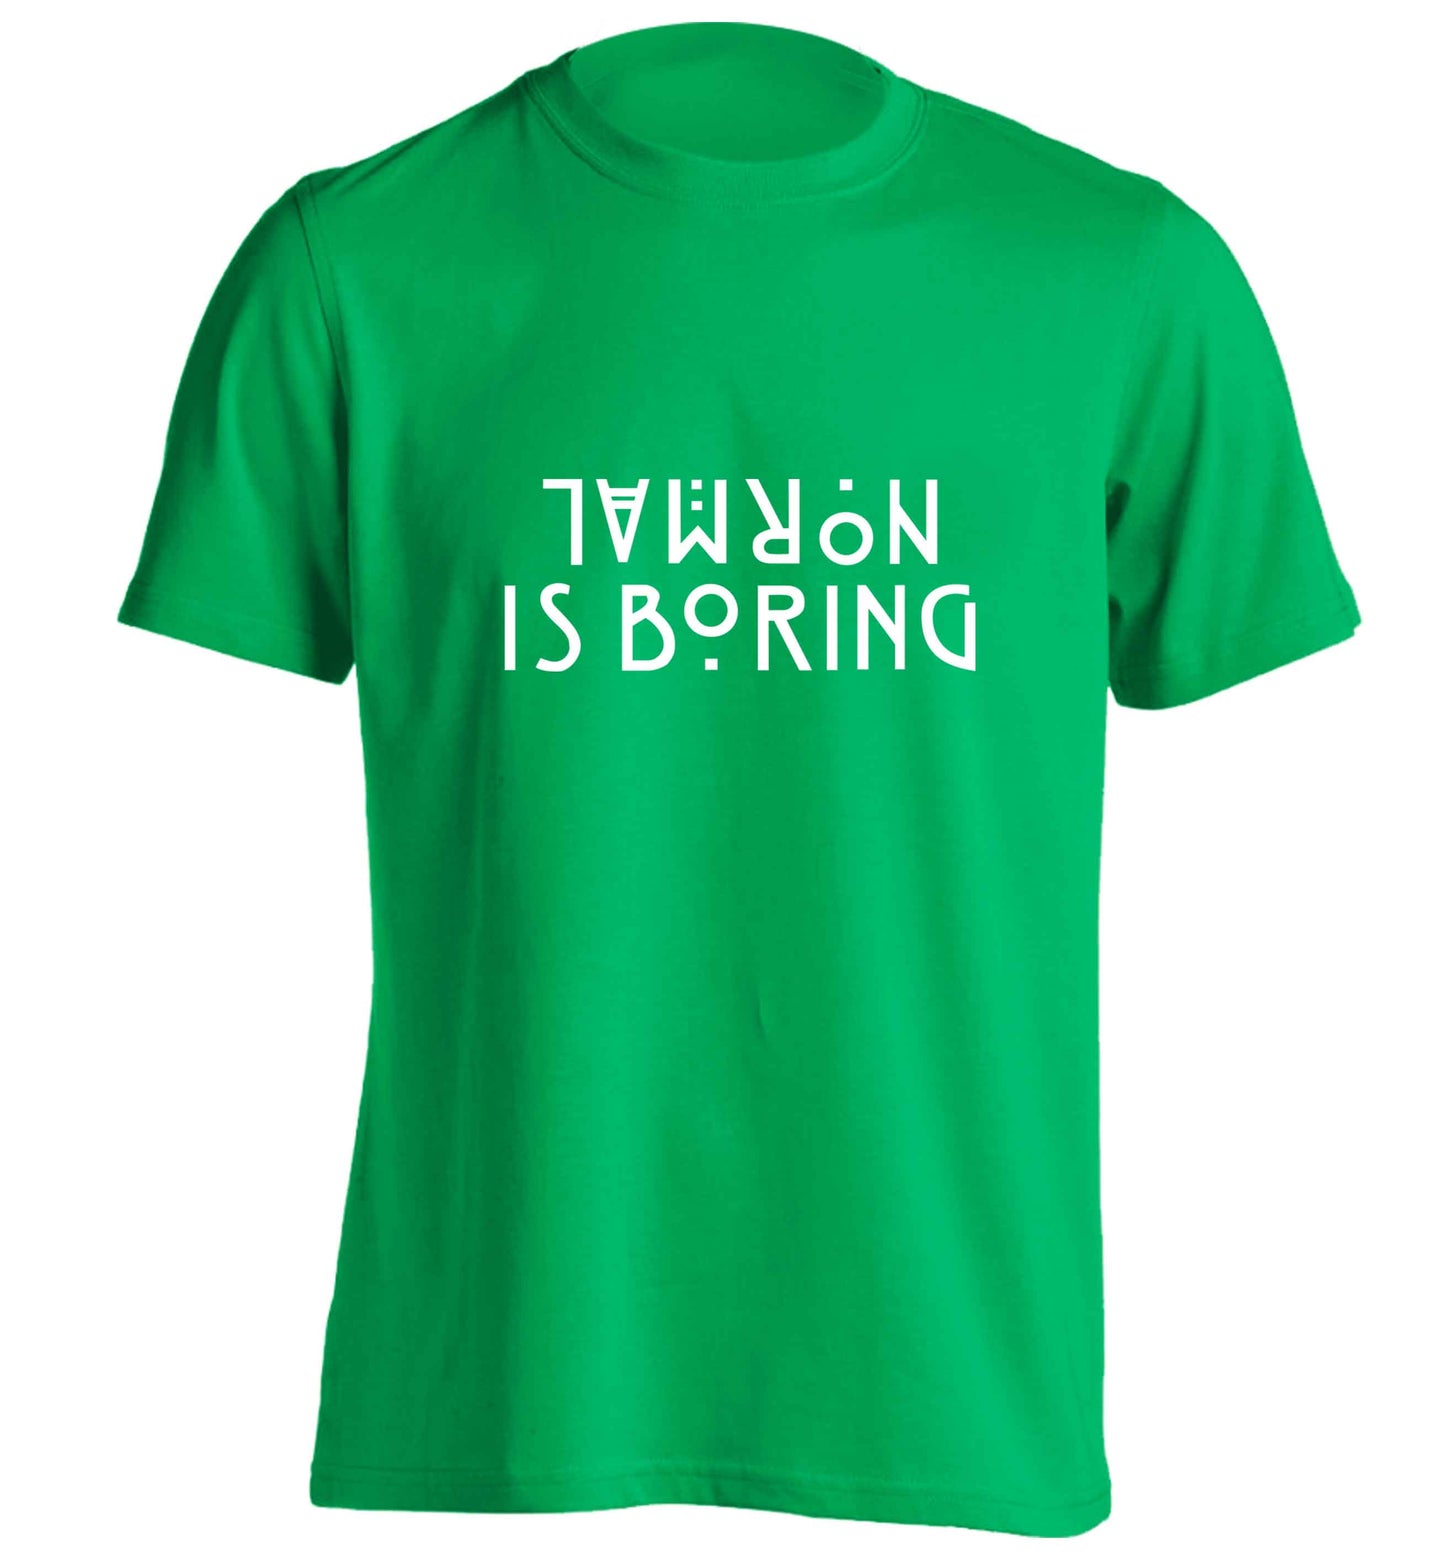 Normal is boring adults unisex green Tshirt 2XL